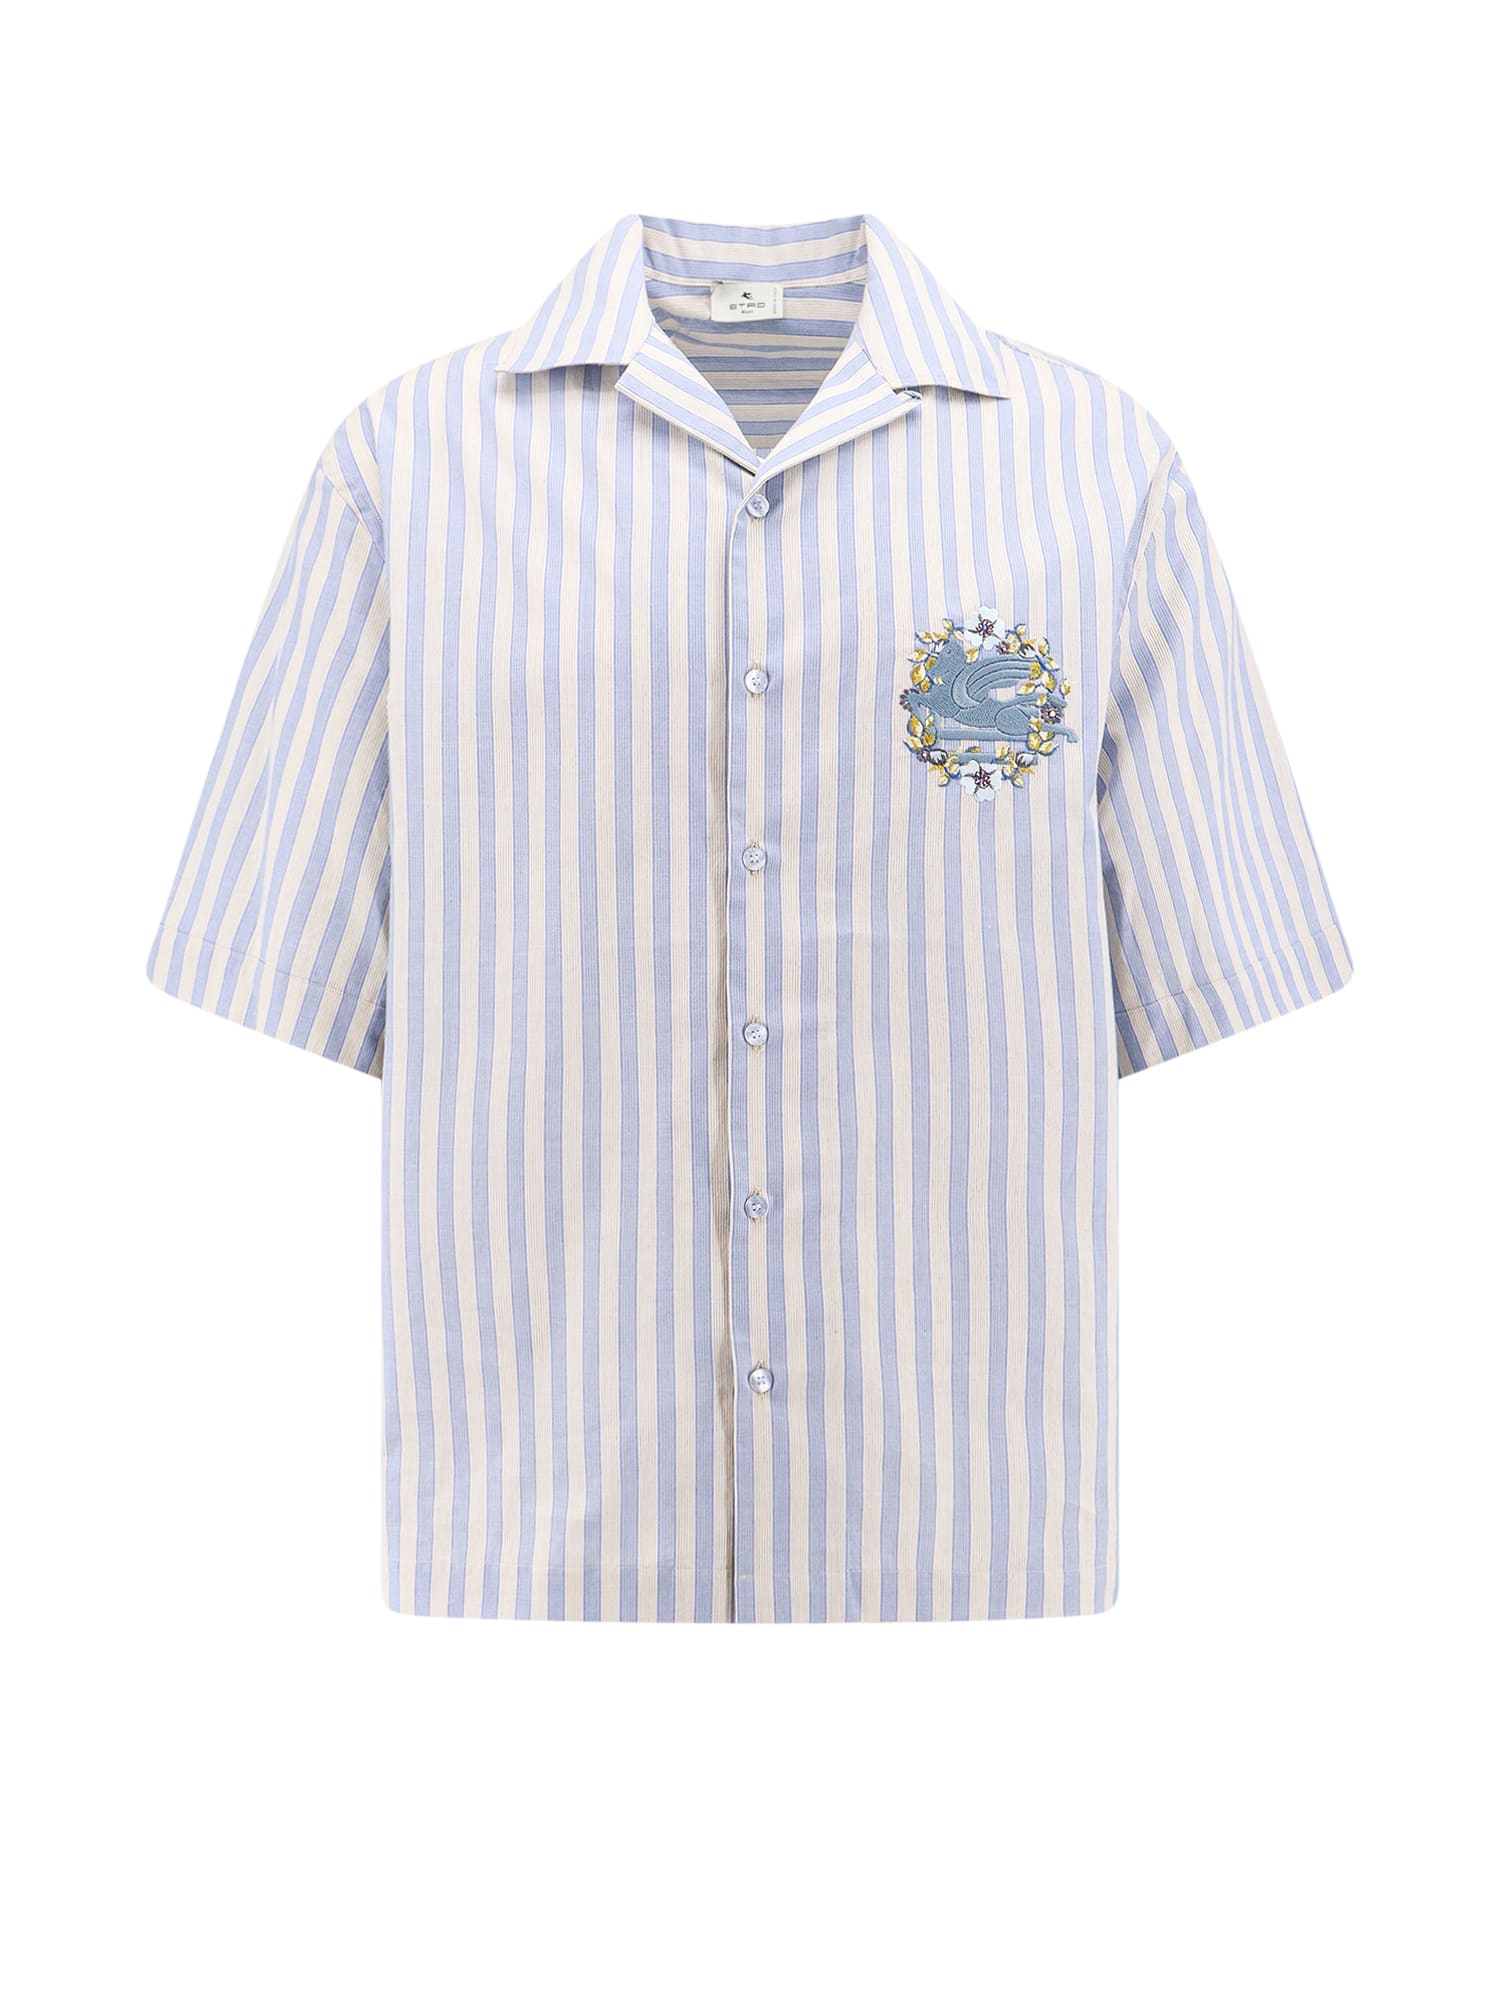 Light Blue And White Striped Bowling Shirt